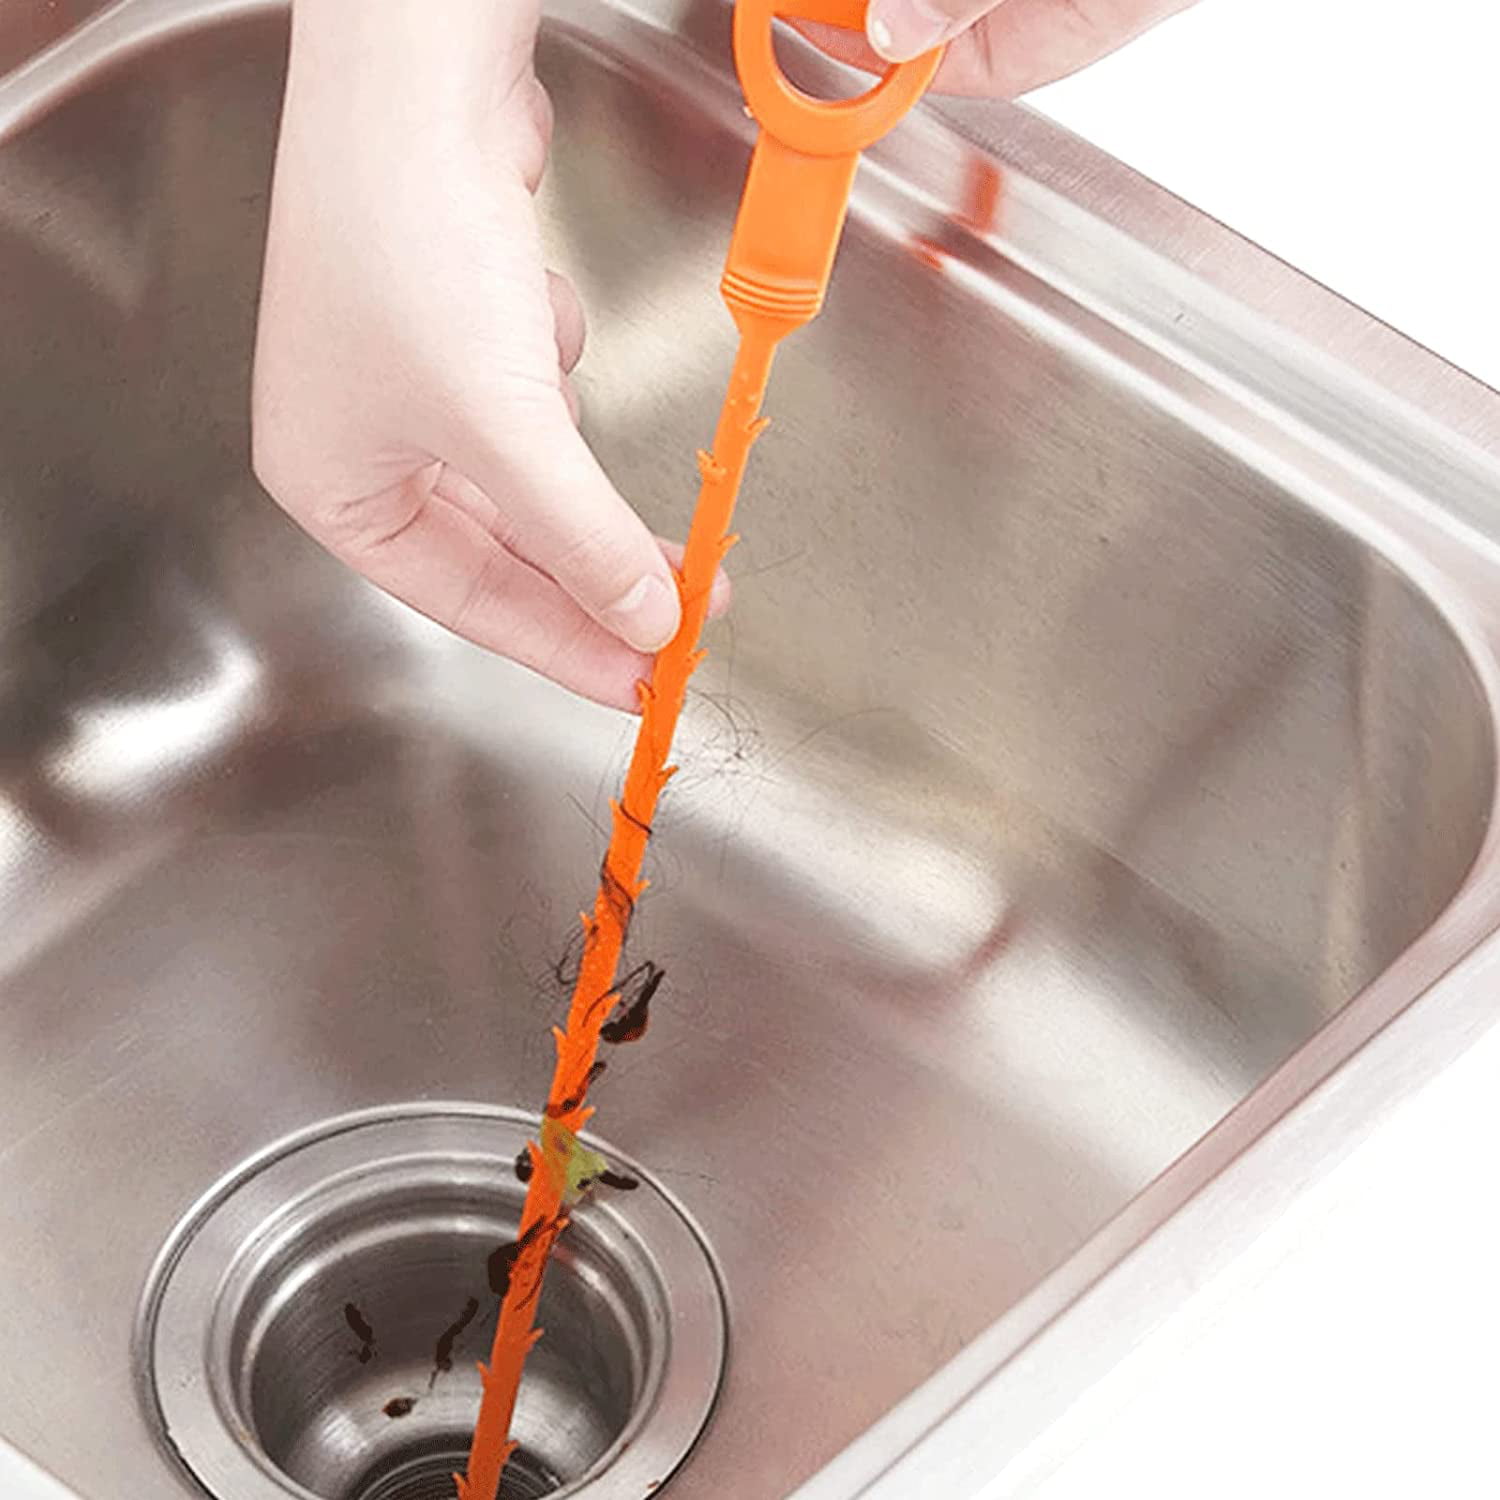 PLUMBERS TOOLS Drain Cleaning Tool 500mm Drain Snake Hair